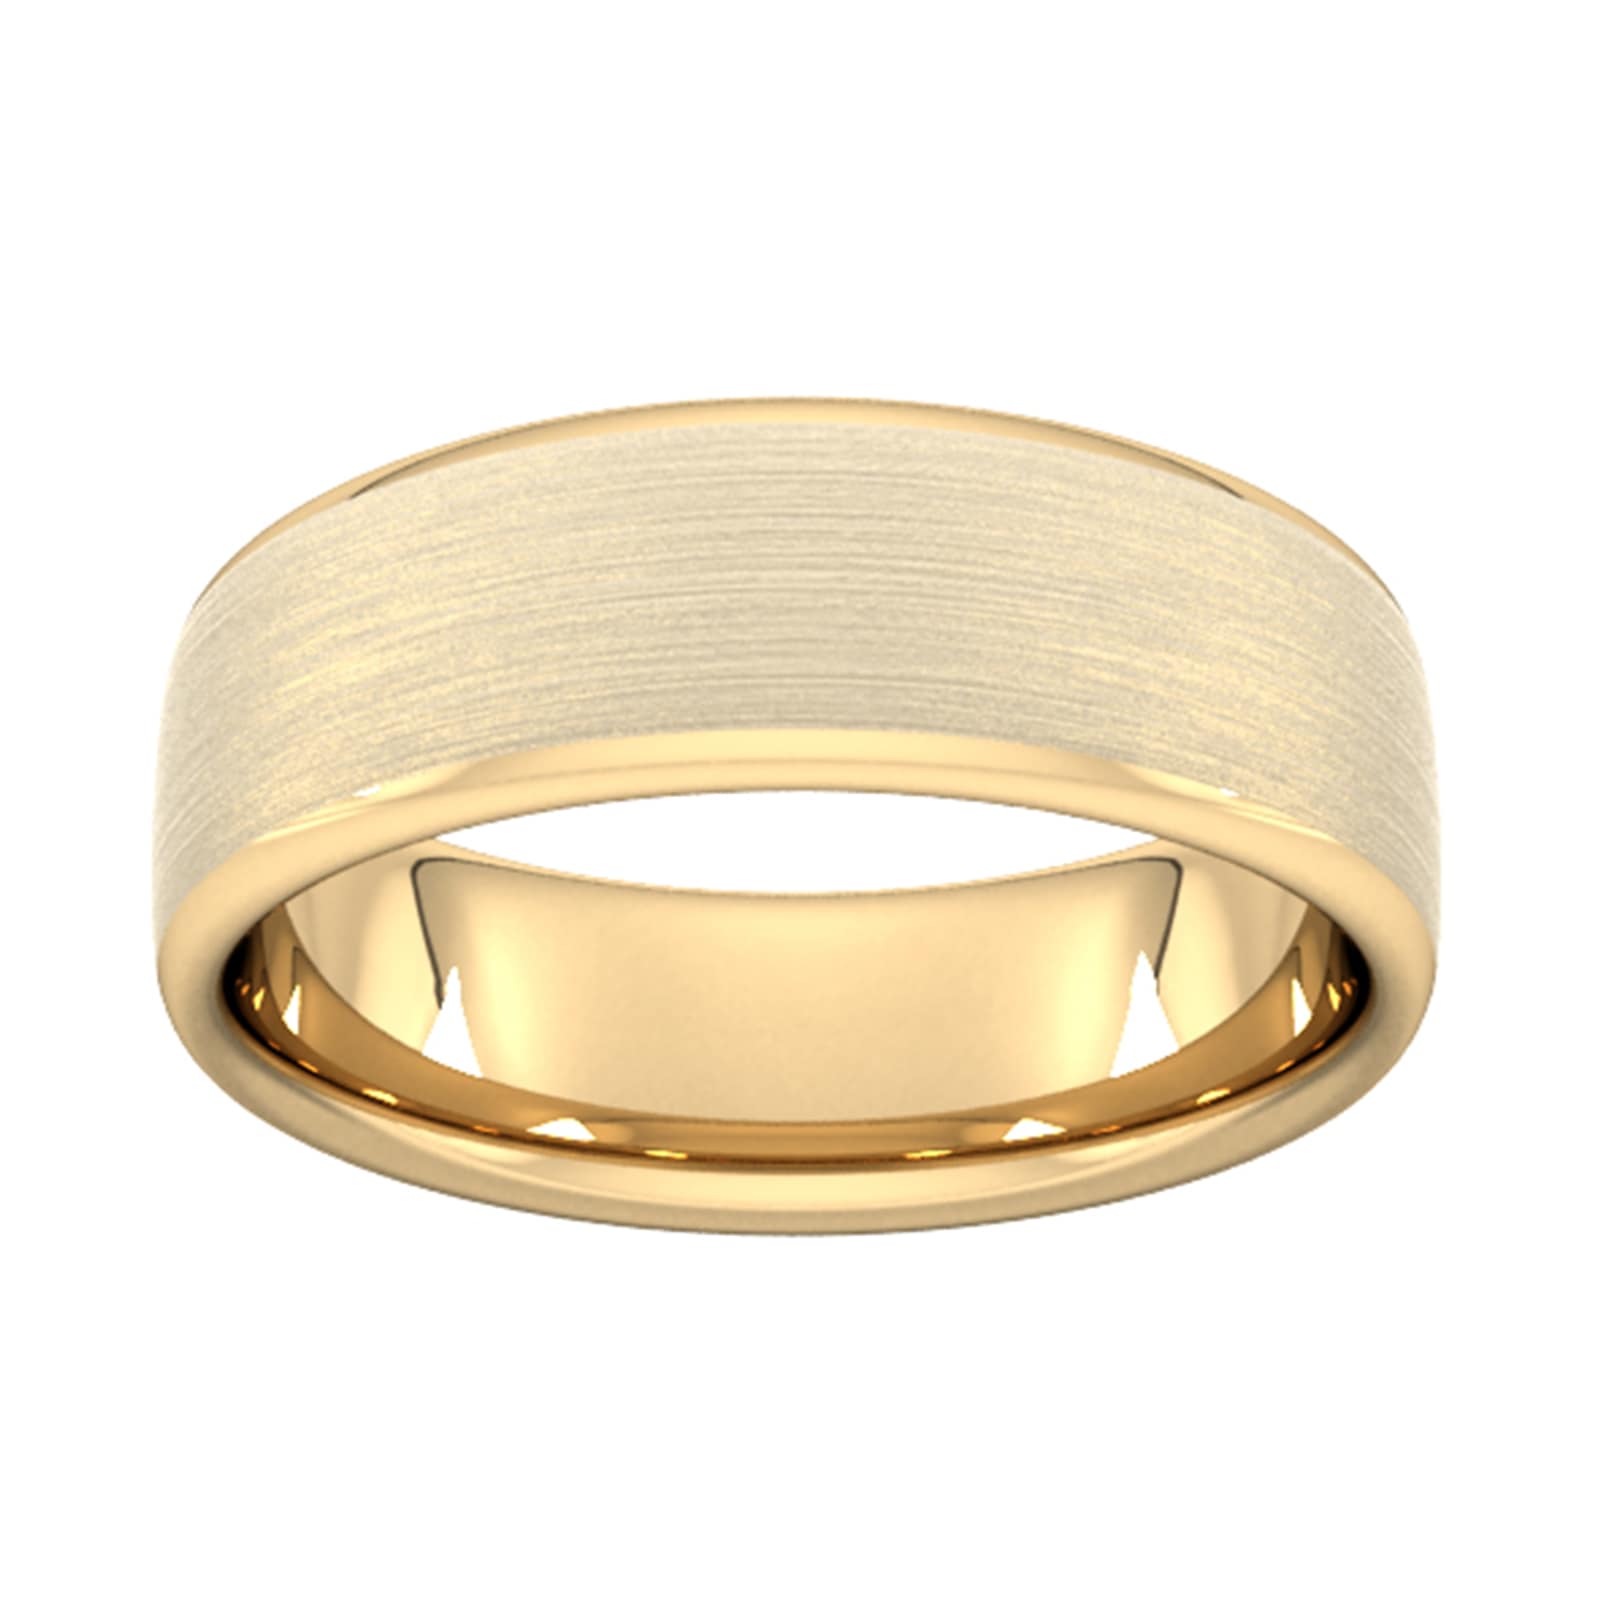 7mm D Shape Heavy Matt Finished Wedding Ring In 9 Carat Yellow Gold - Ring Size Q